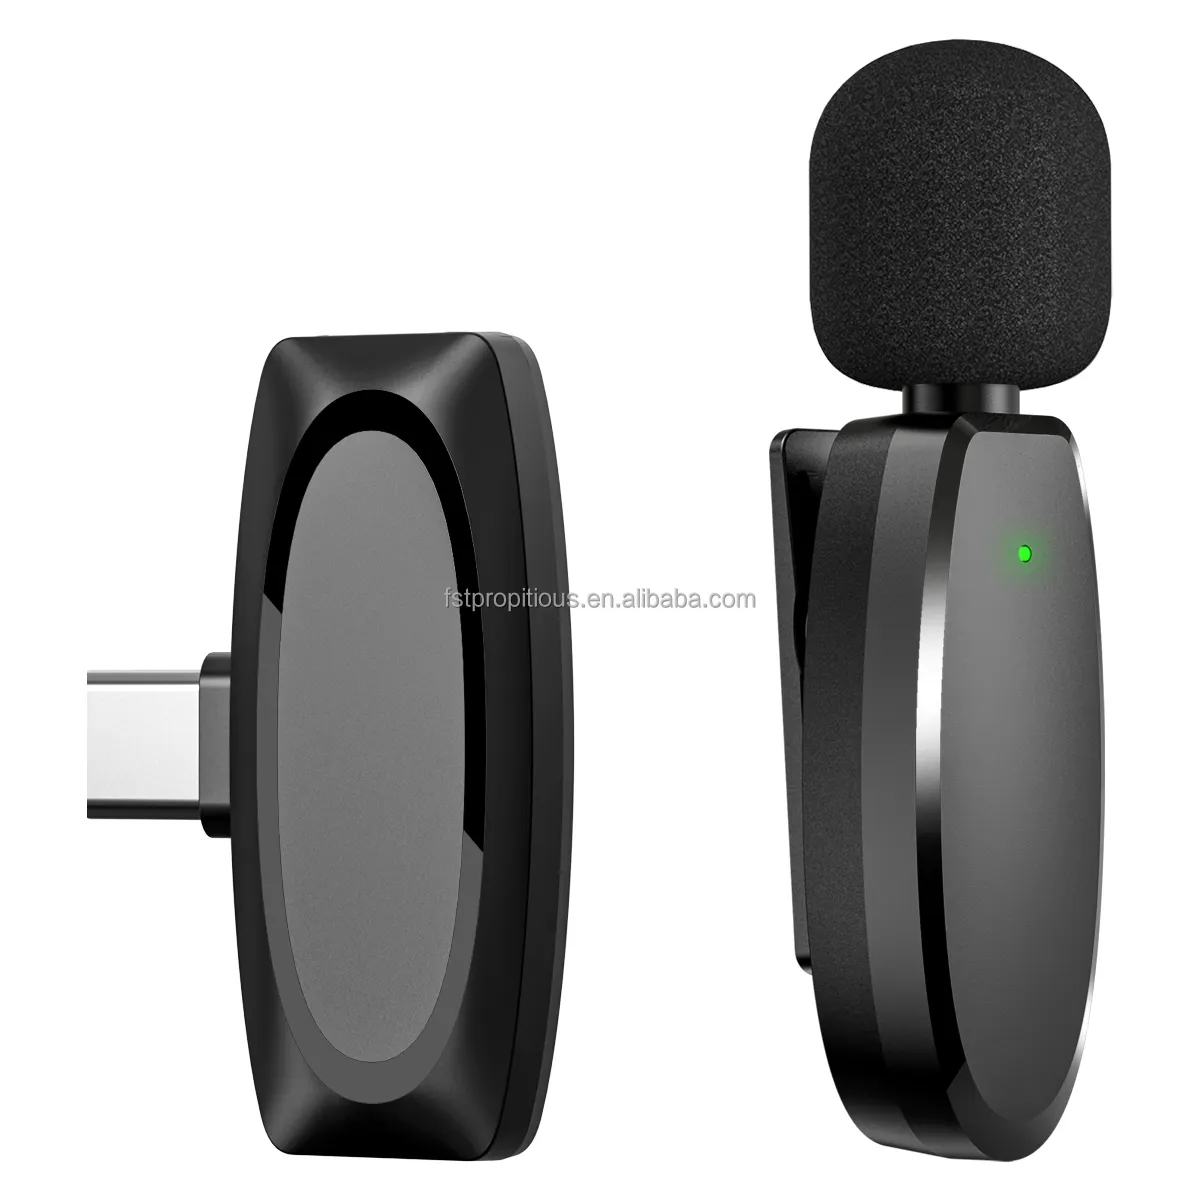 Grosir mikrofon nirkabel OEM 2.4g, mikrofon profesional uhf tanpa kabel lavalier untuk iPhone iPad